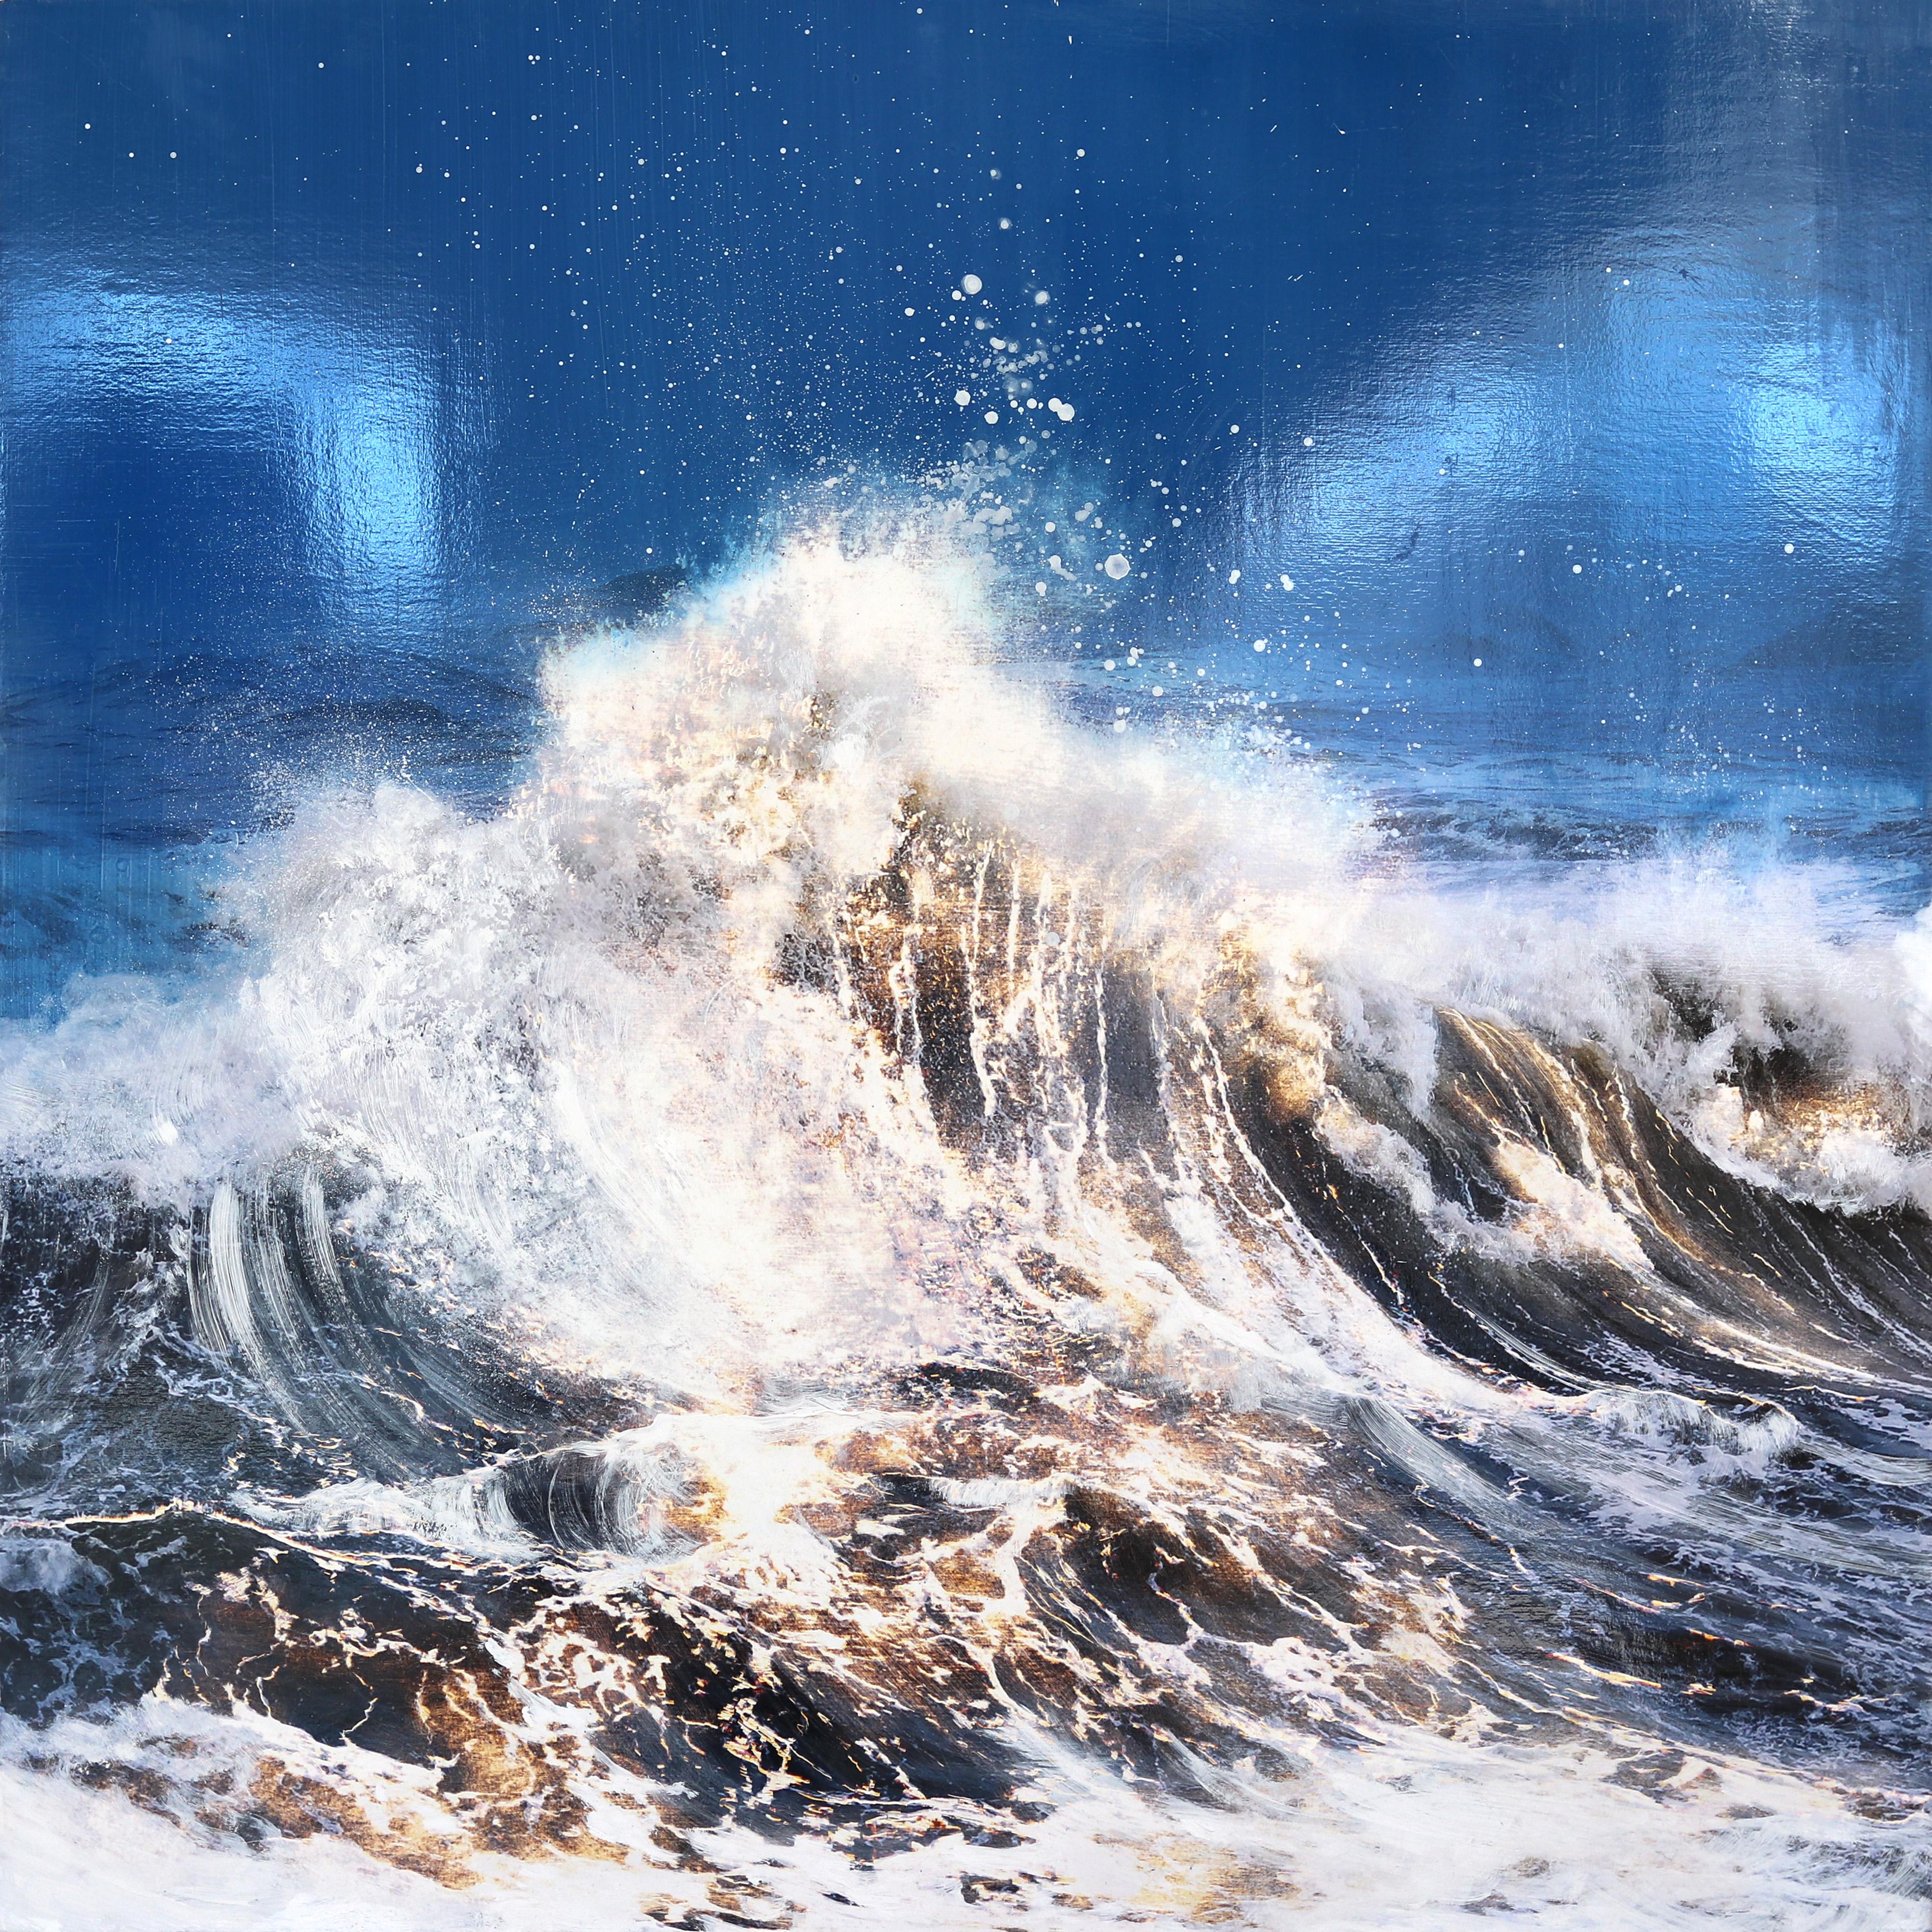 Untamed - Powerful Ocean Waves - Mixed Media Art by Steven Nederveen